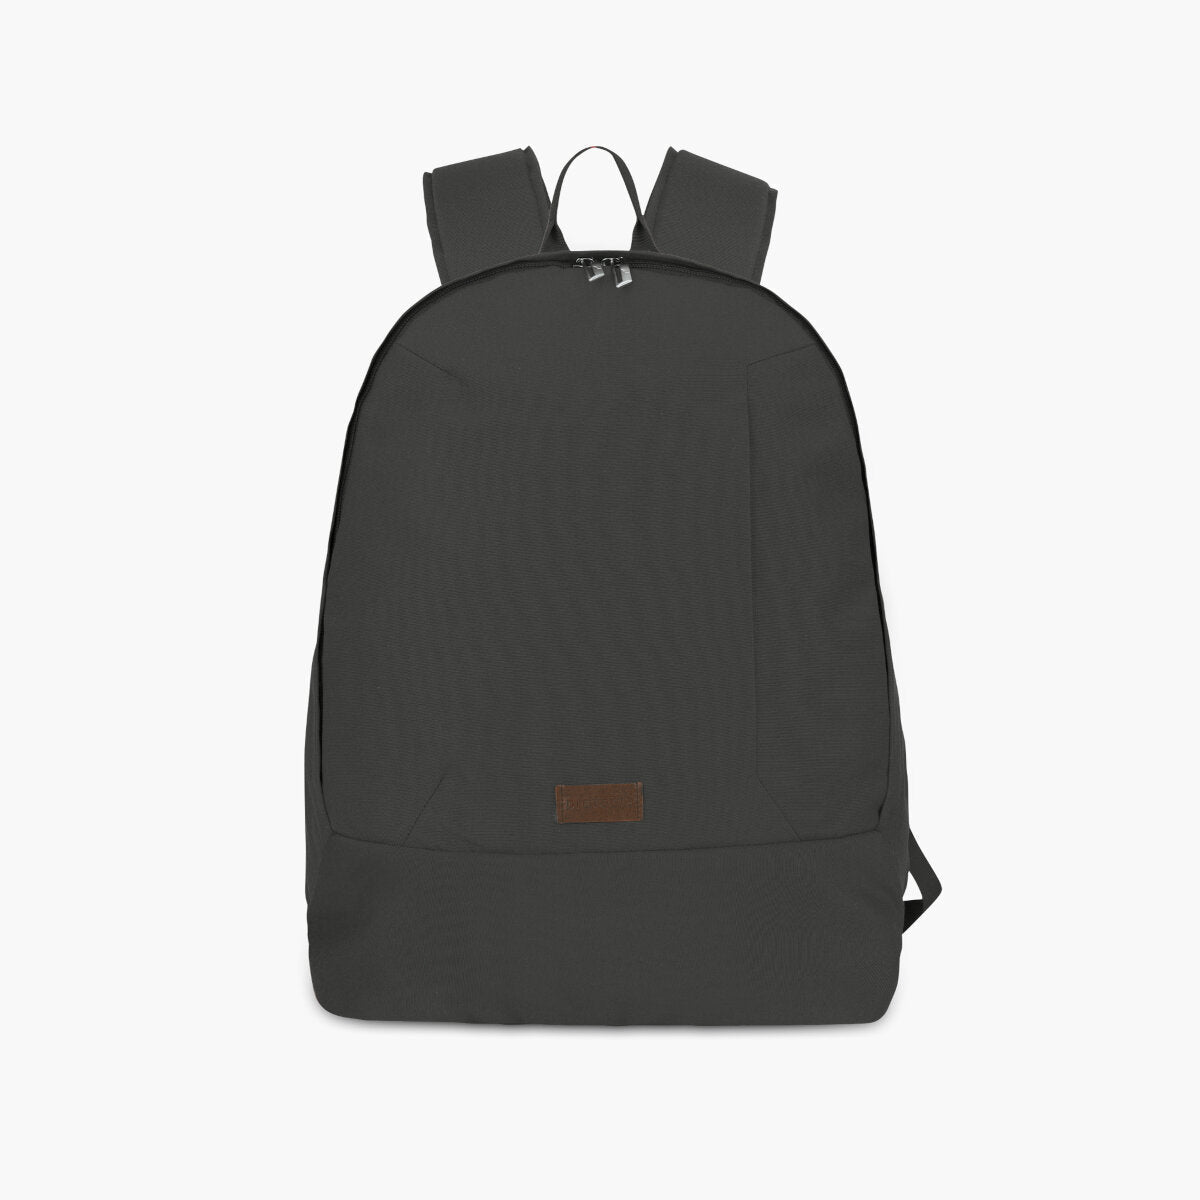 Green | Protecta Steady Progress Laptop Backpack - Main